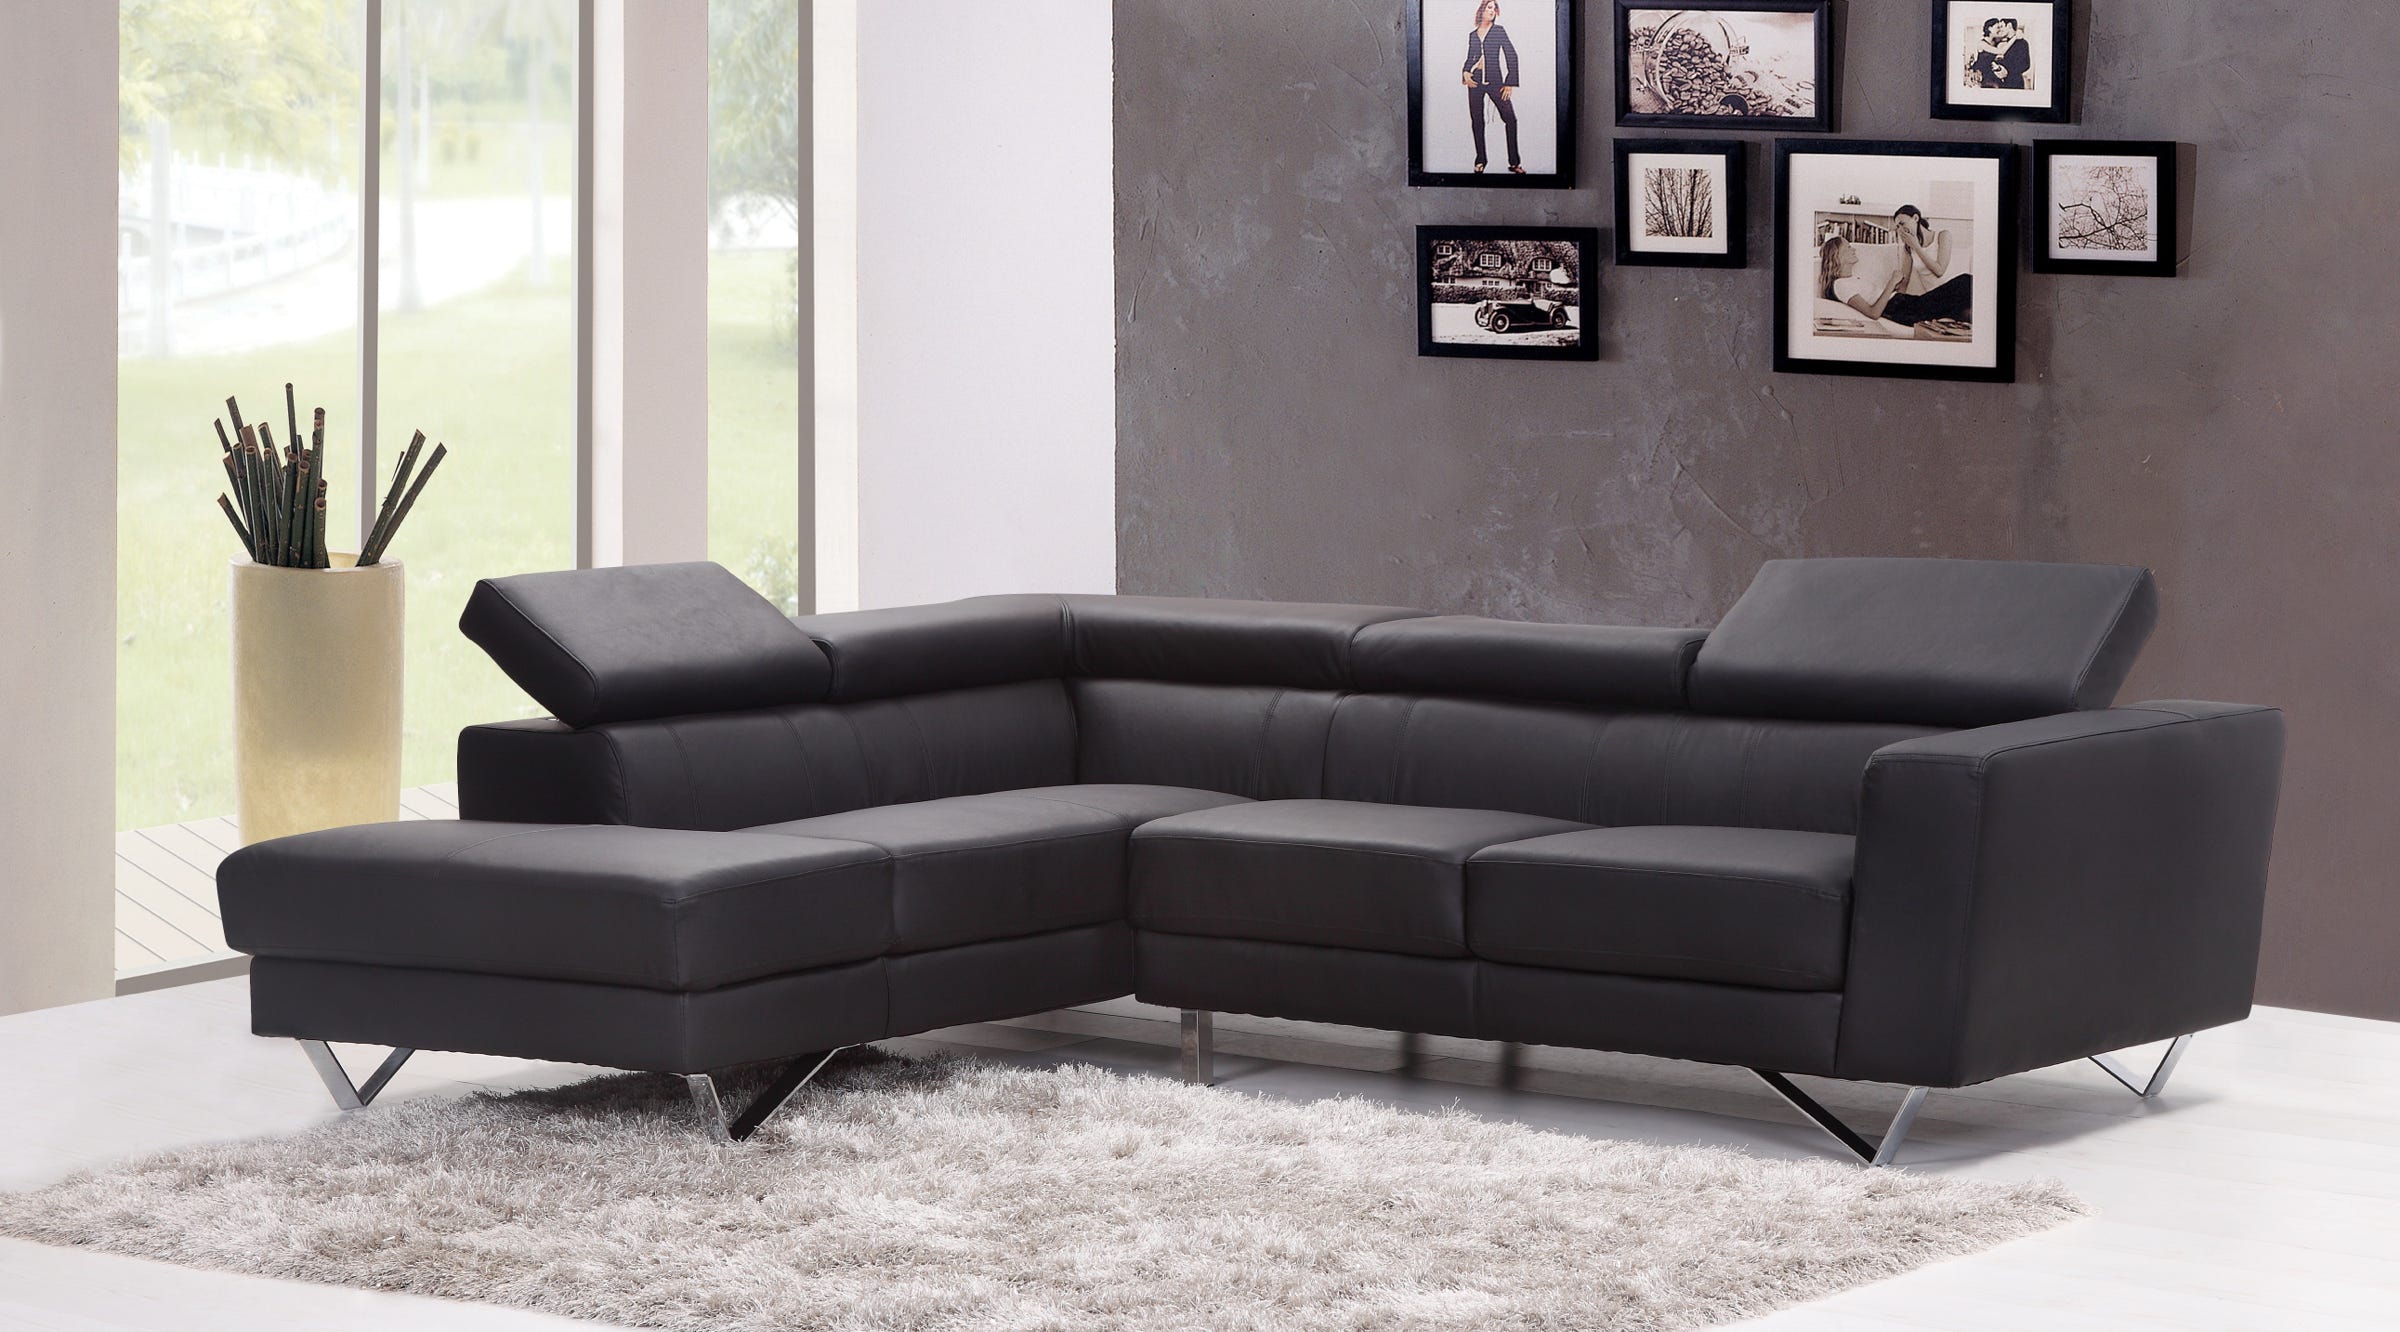 Furniture Photography of Sofa